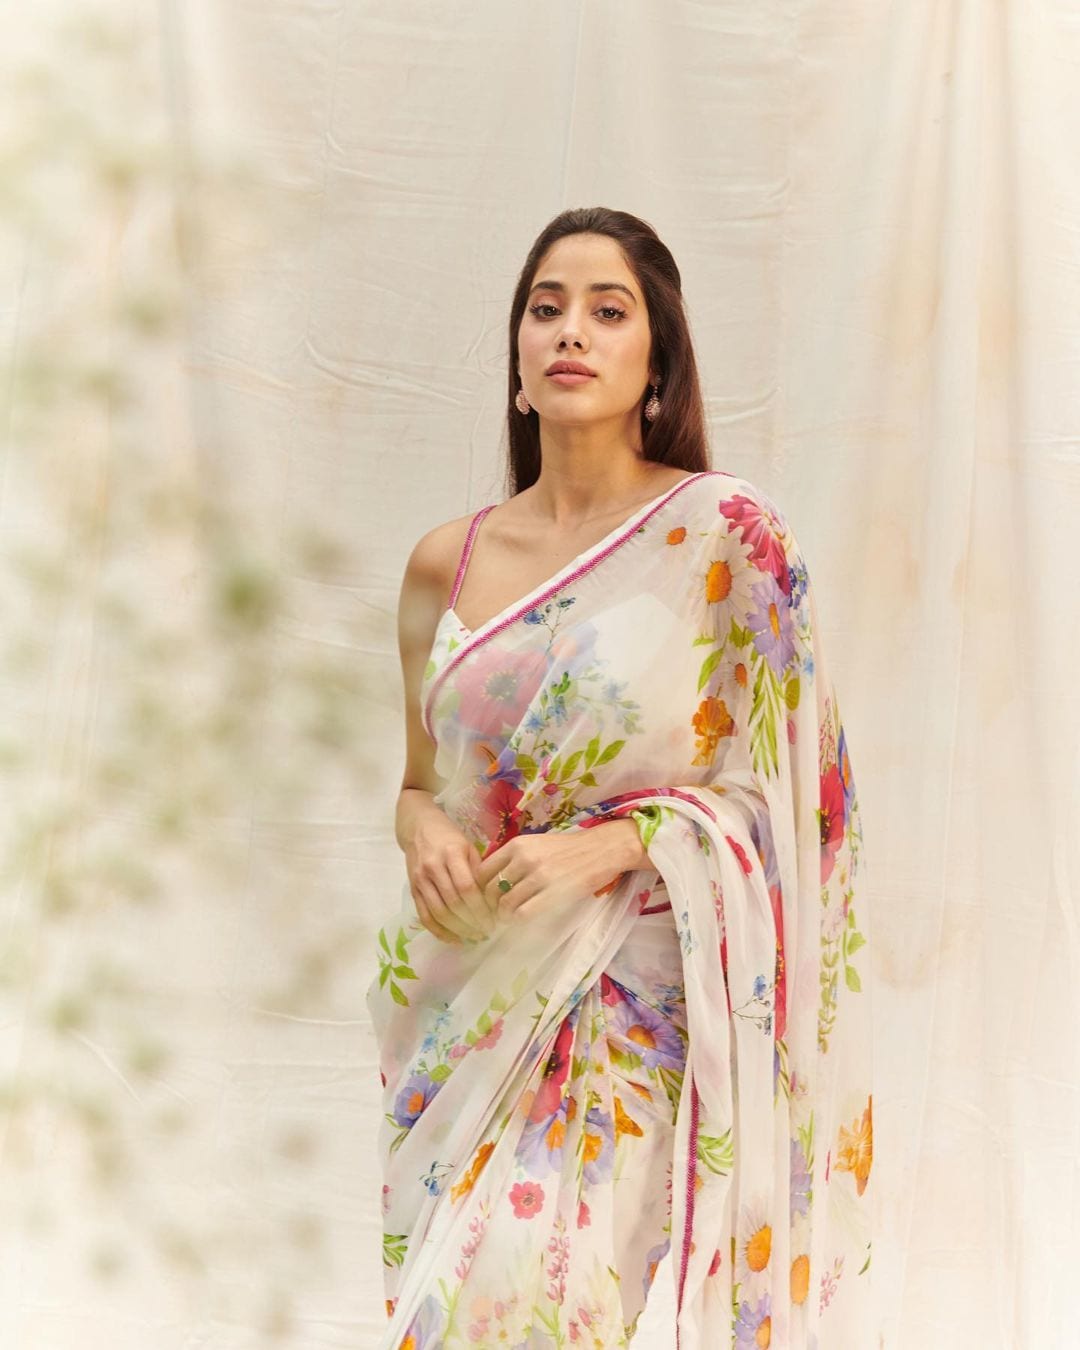 Janhvi Kapoor looks pretty in a floral-printed chiffon saree